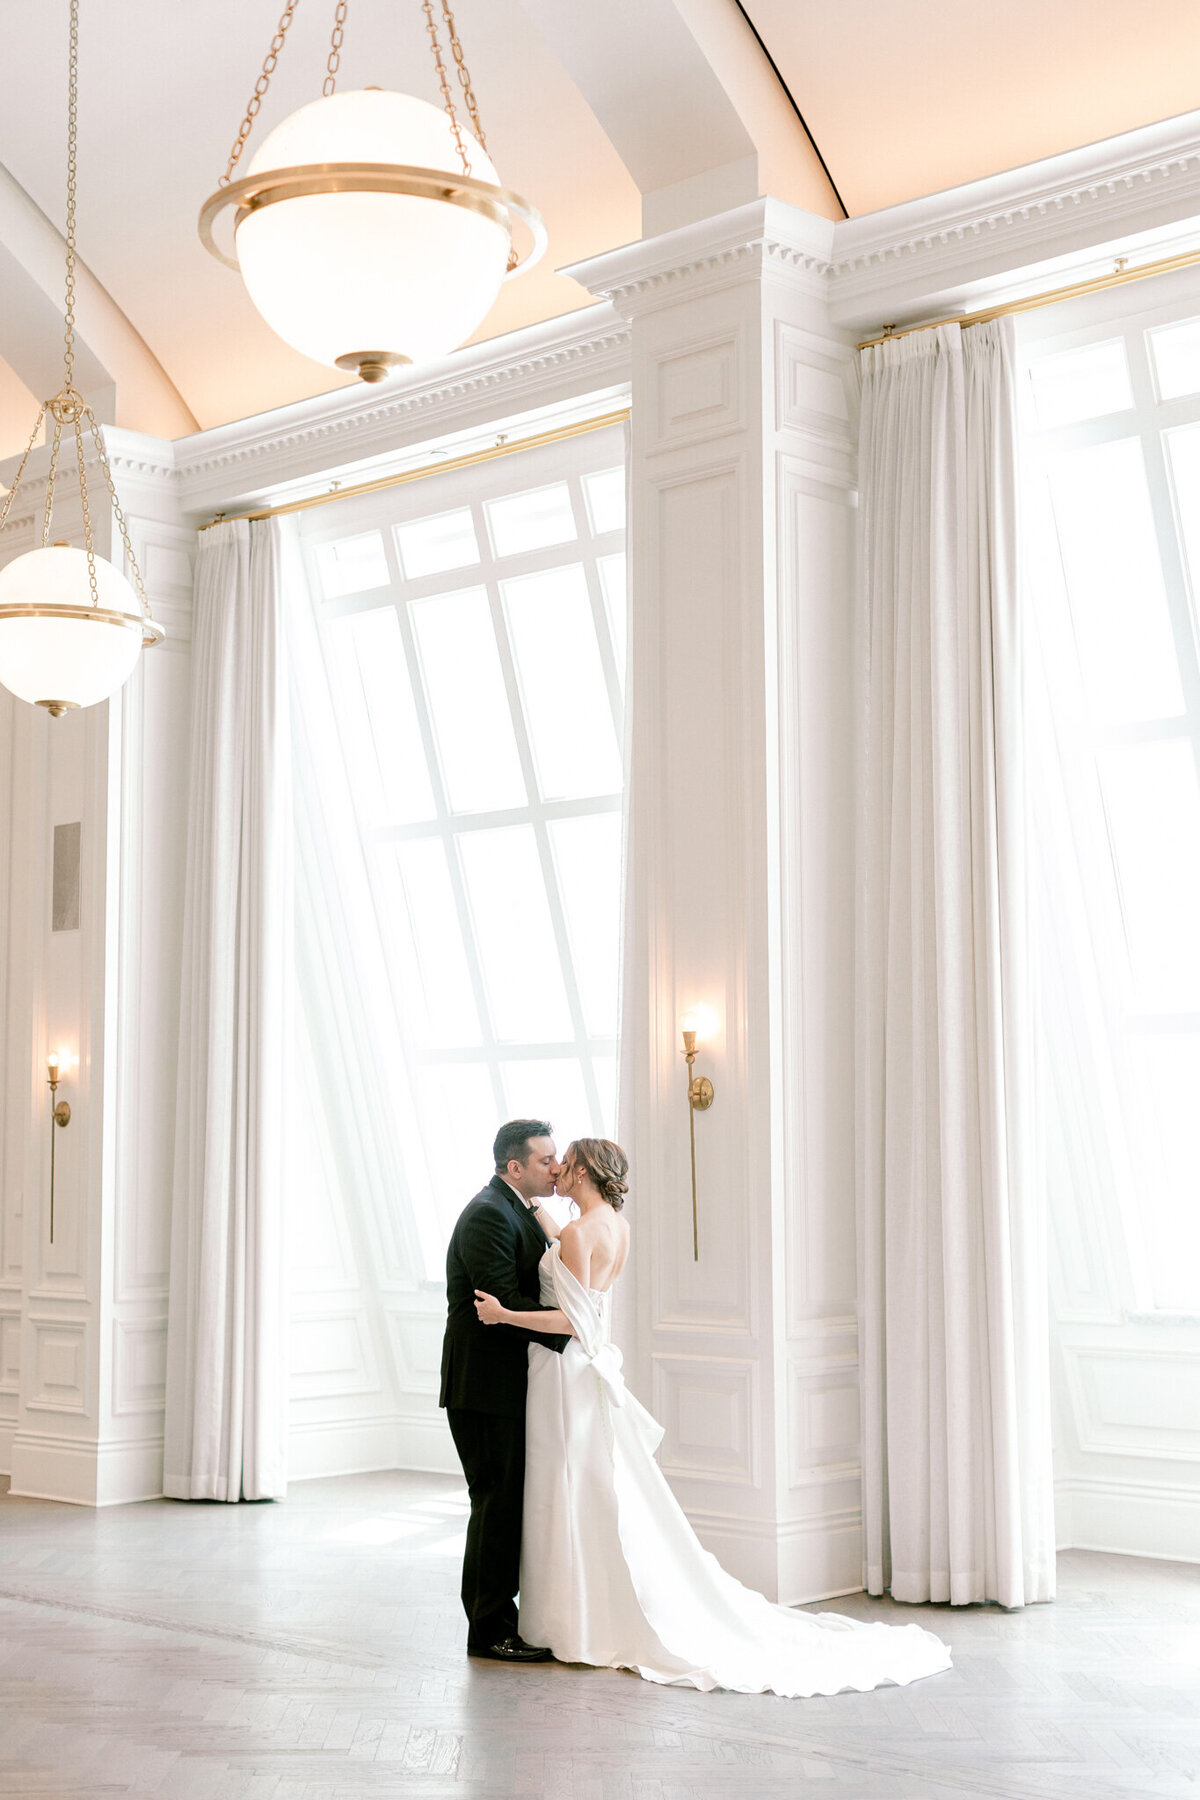 Virginia & Michael's Wedding at the Adolphus Hotel | Dallas Wedding Photographer | Sami Kathryn Photography-4